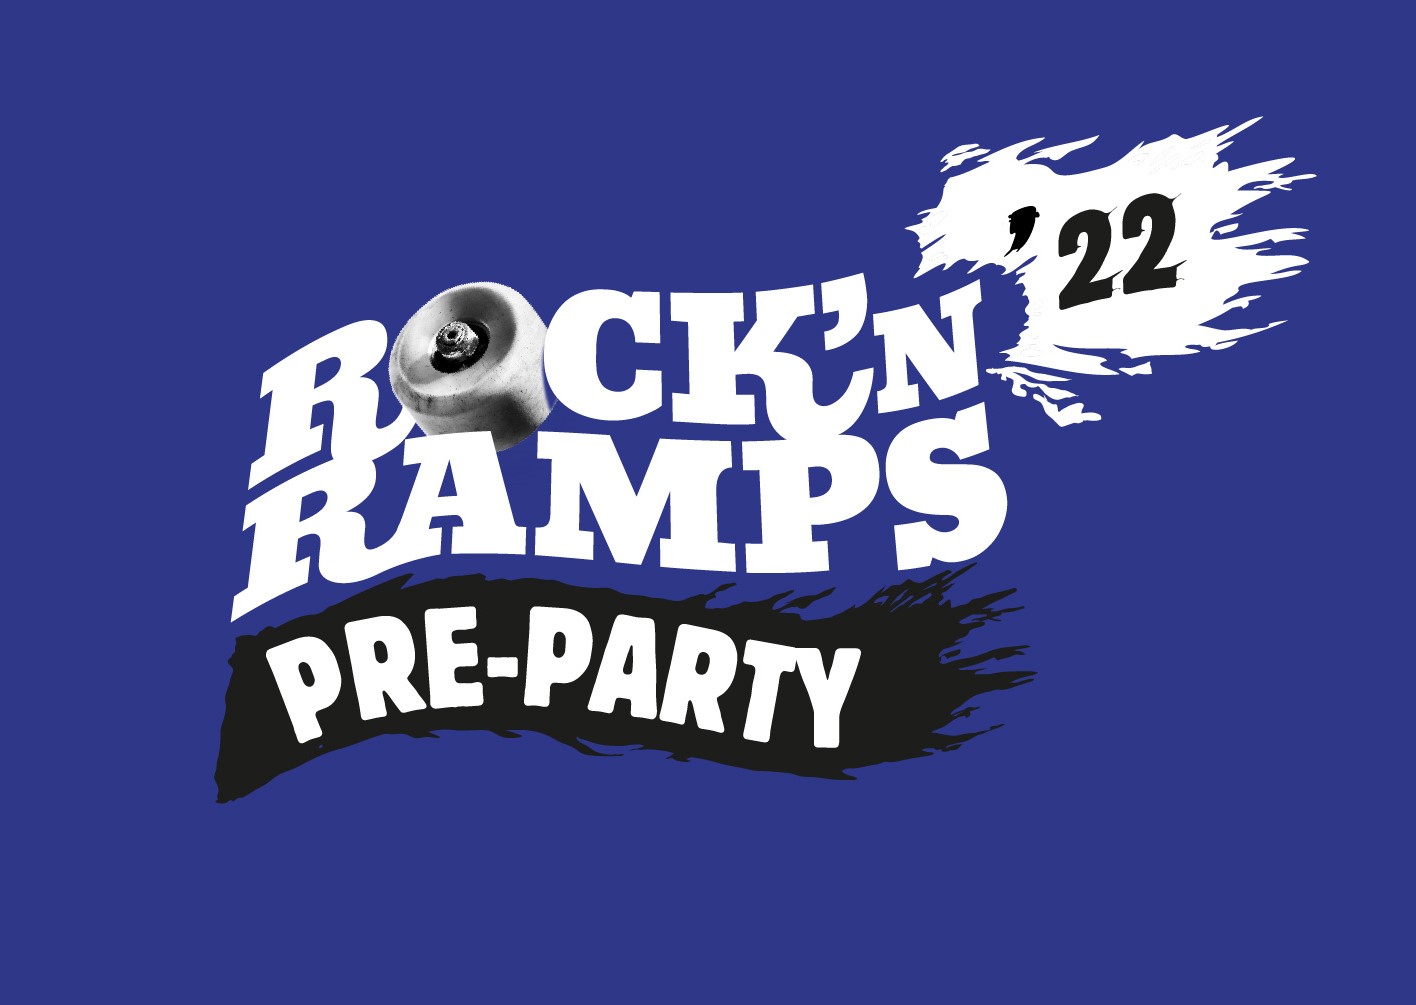 ROCK 'N RAMPS PRE-PARTY